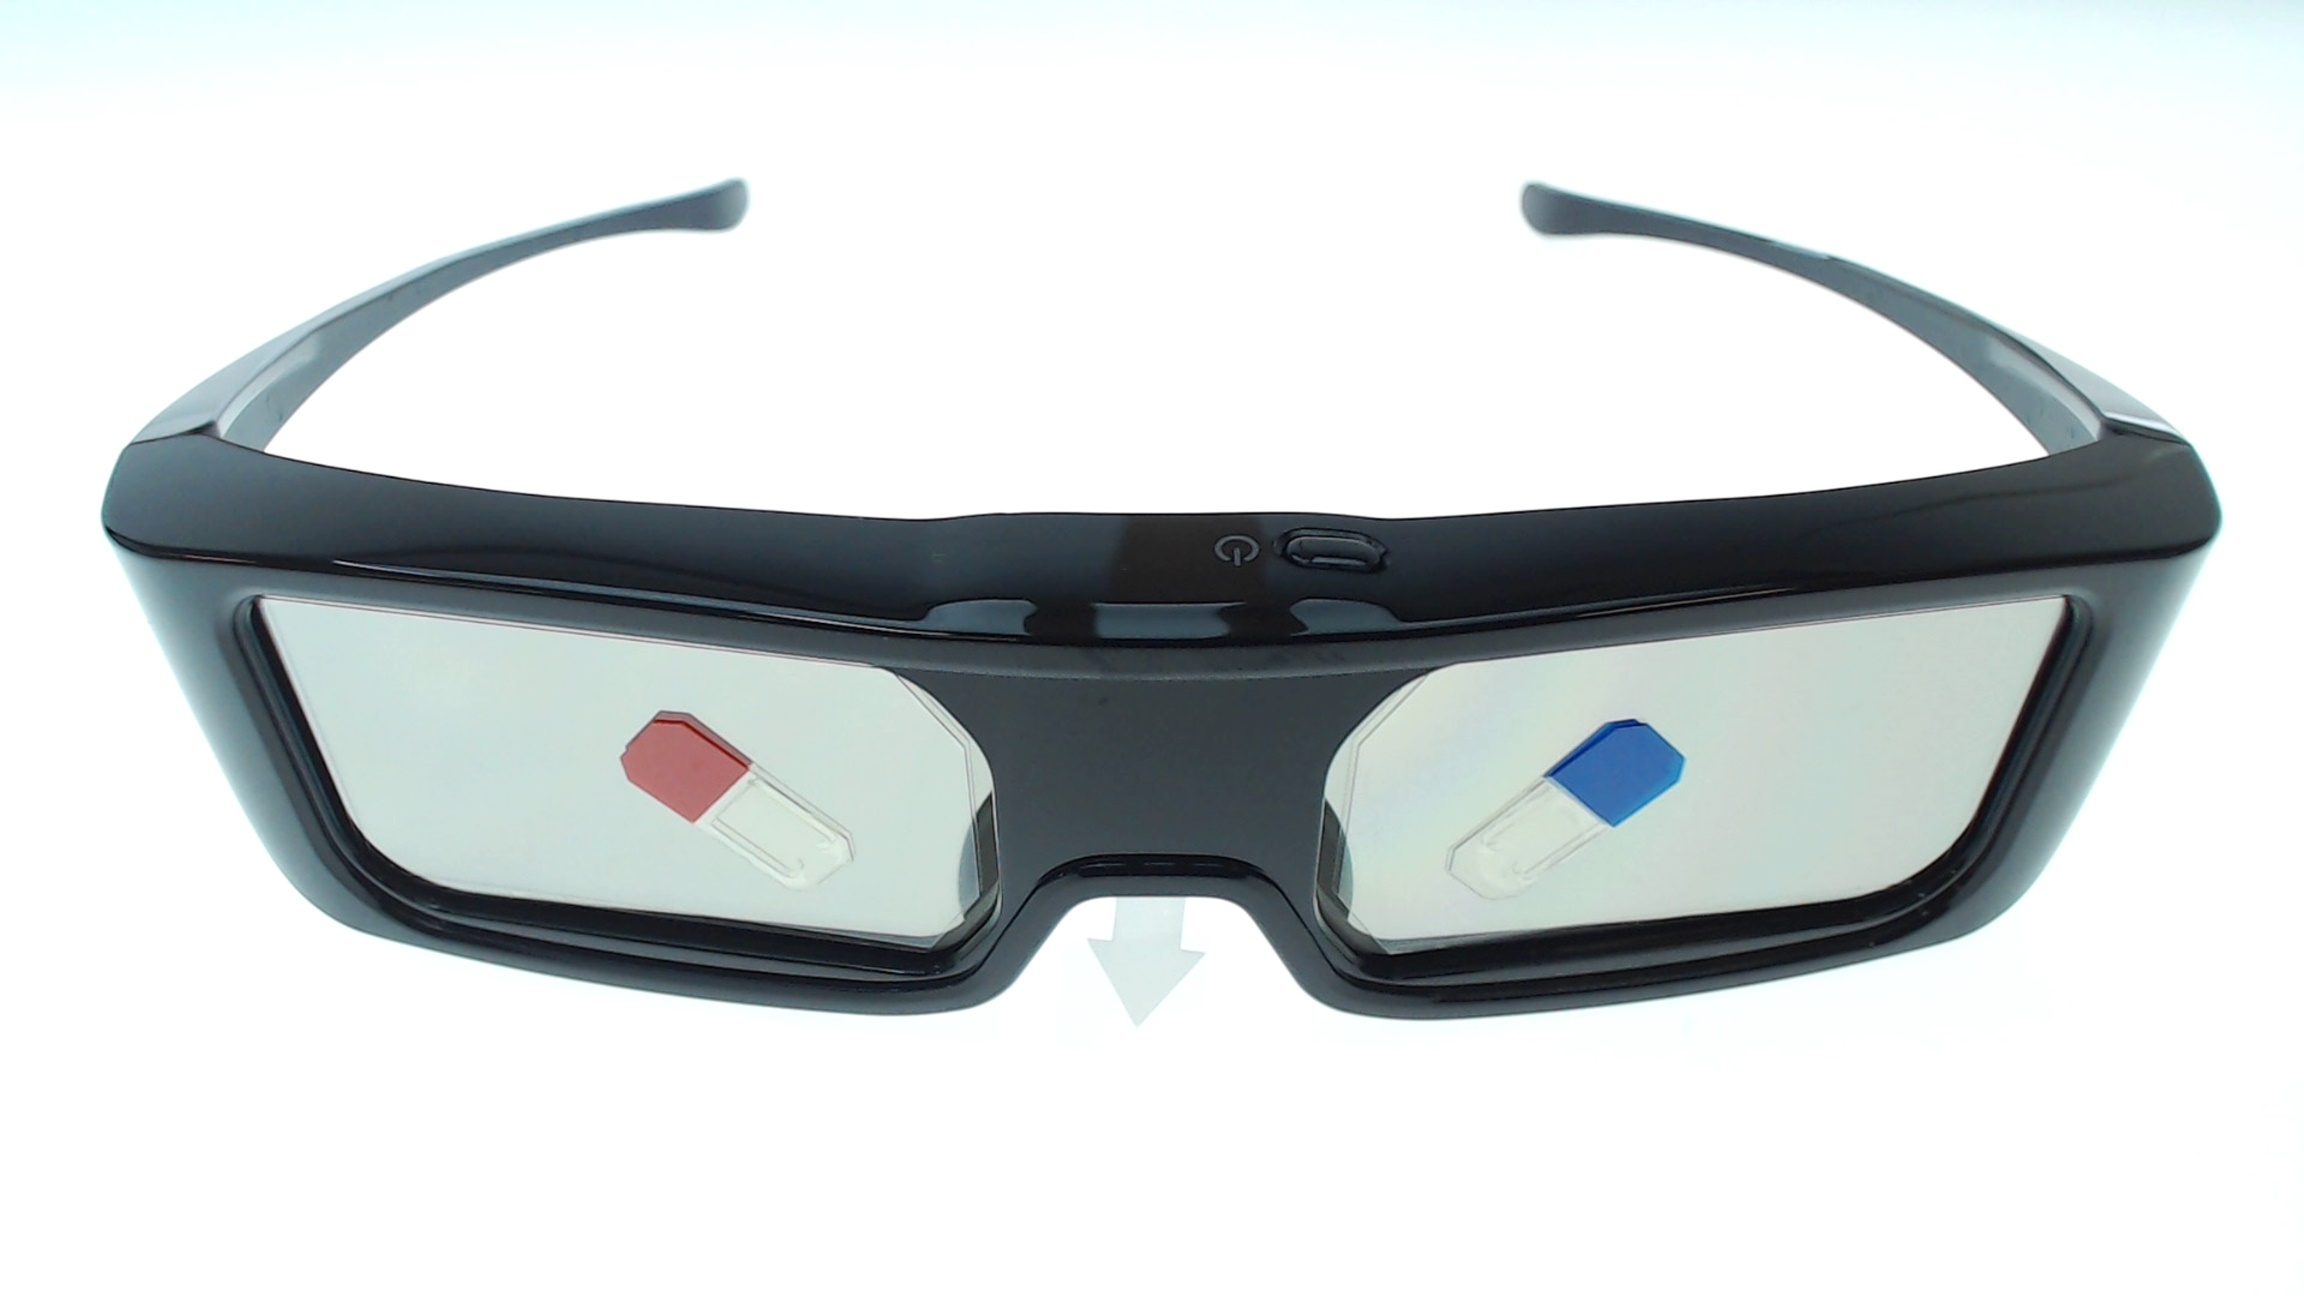 N5ZZ00000325  Gafas 3D activas originales Panasonic ( = N5ZZ00000334 )para :TX-P55VT60E